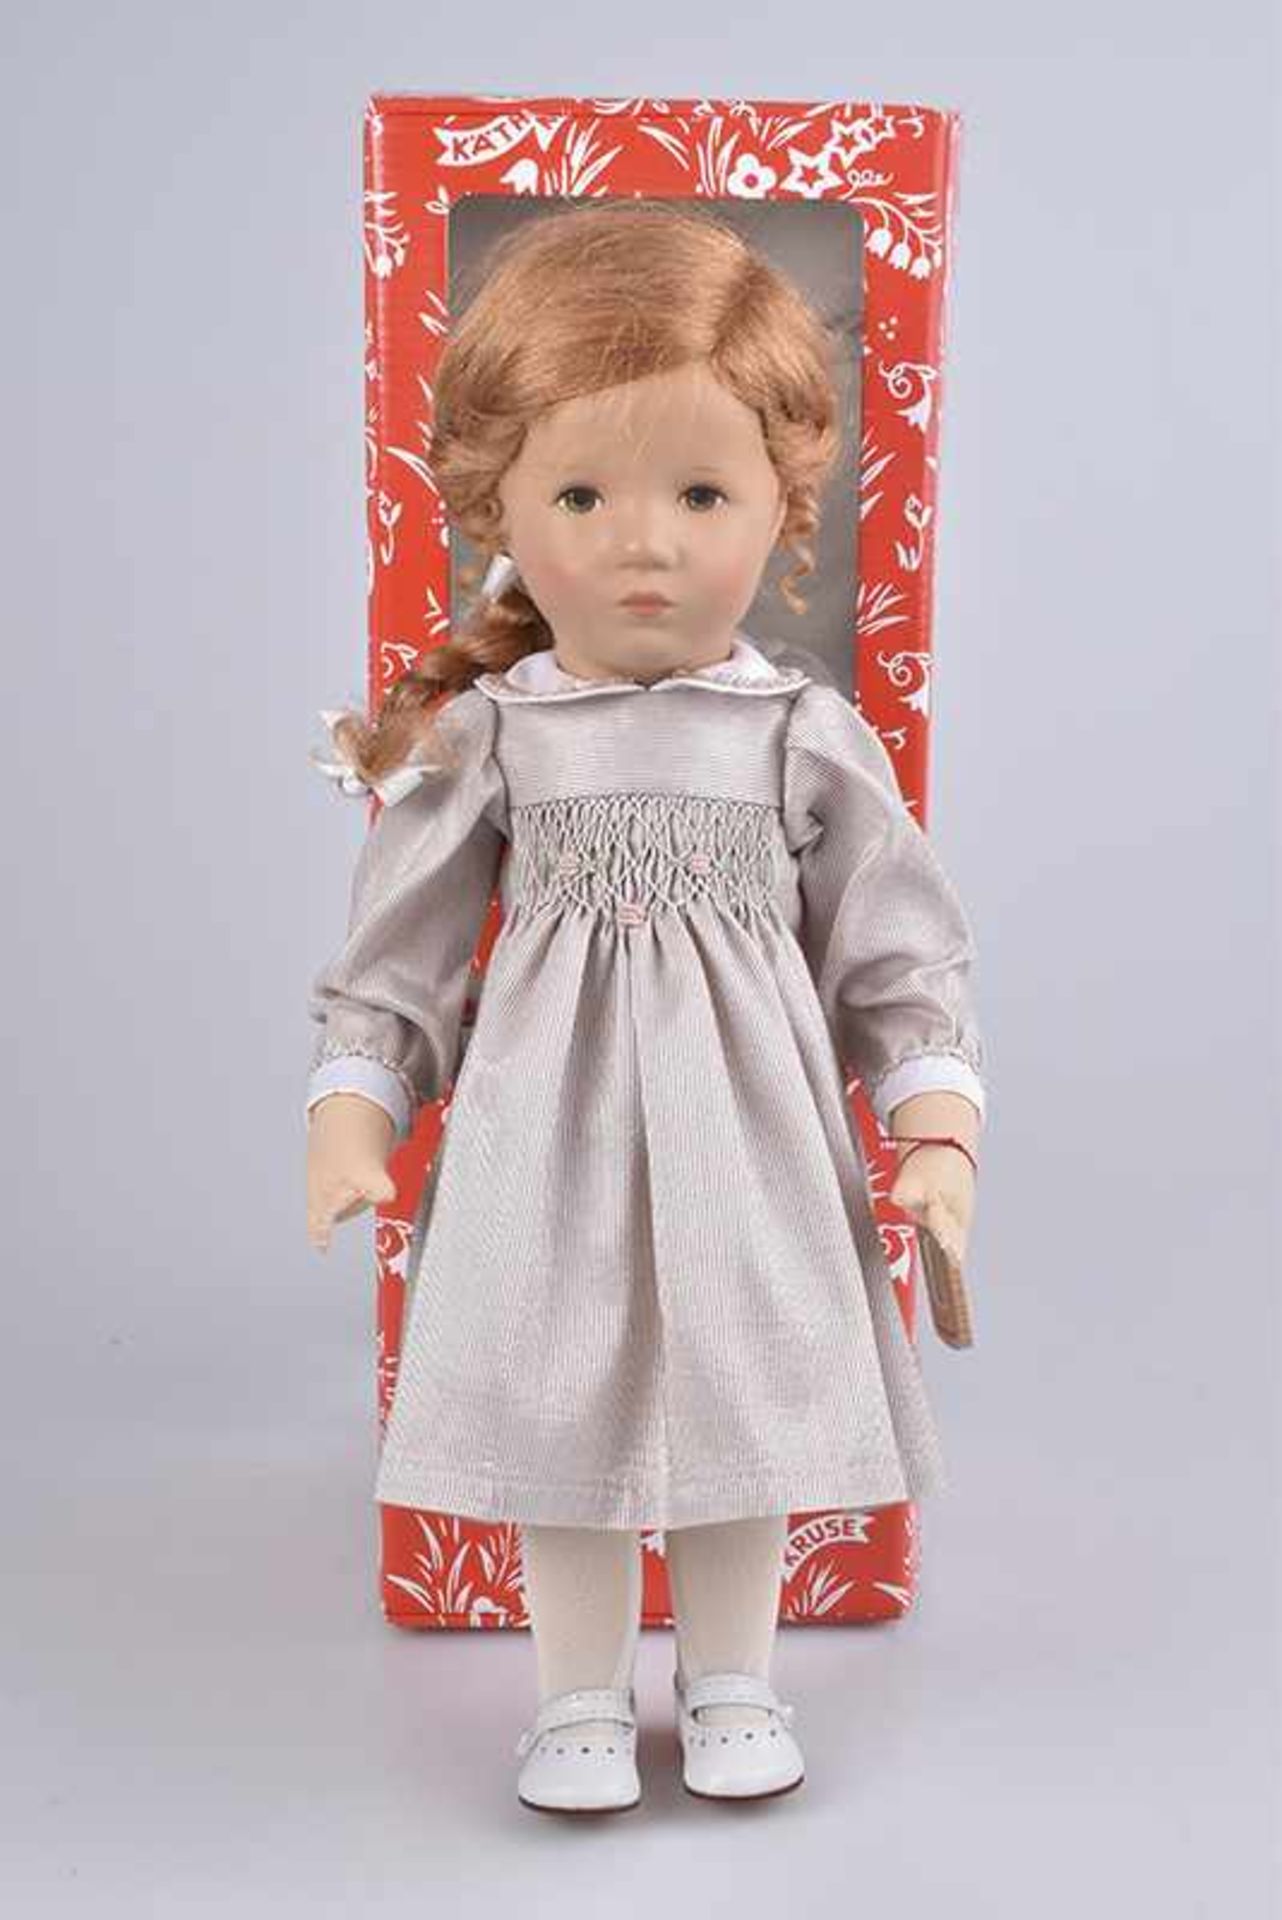 KÄTHE KRUSE Puppe "Theresa",Typ 35 H, mit Zertifikat und Etikett, Kunststoffkopf, Stoffkörper mit